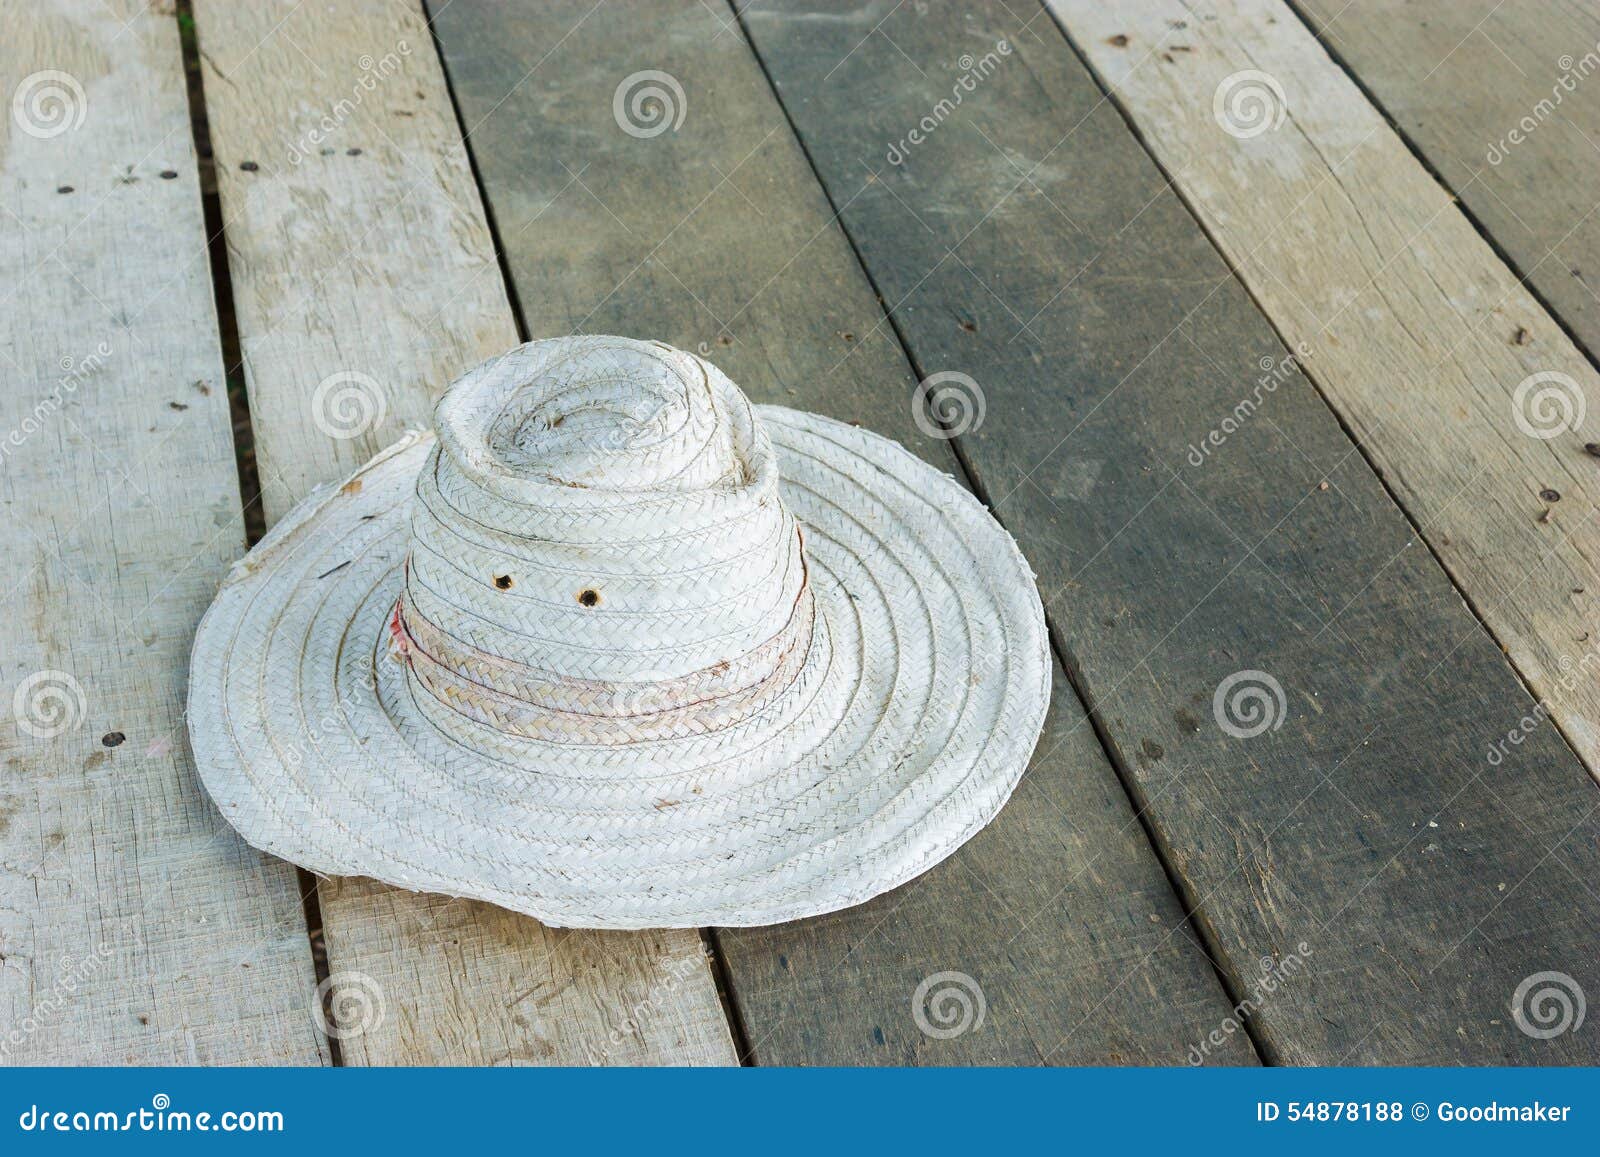 Woven hat stock photo. Image of pattern, fashion, white - 54878188